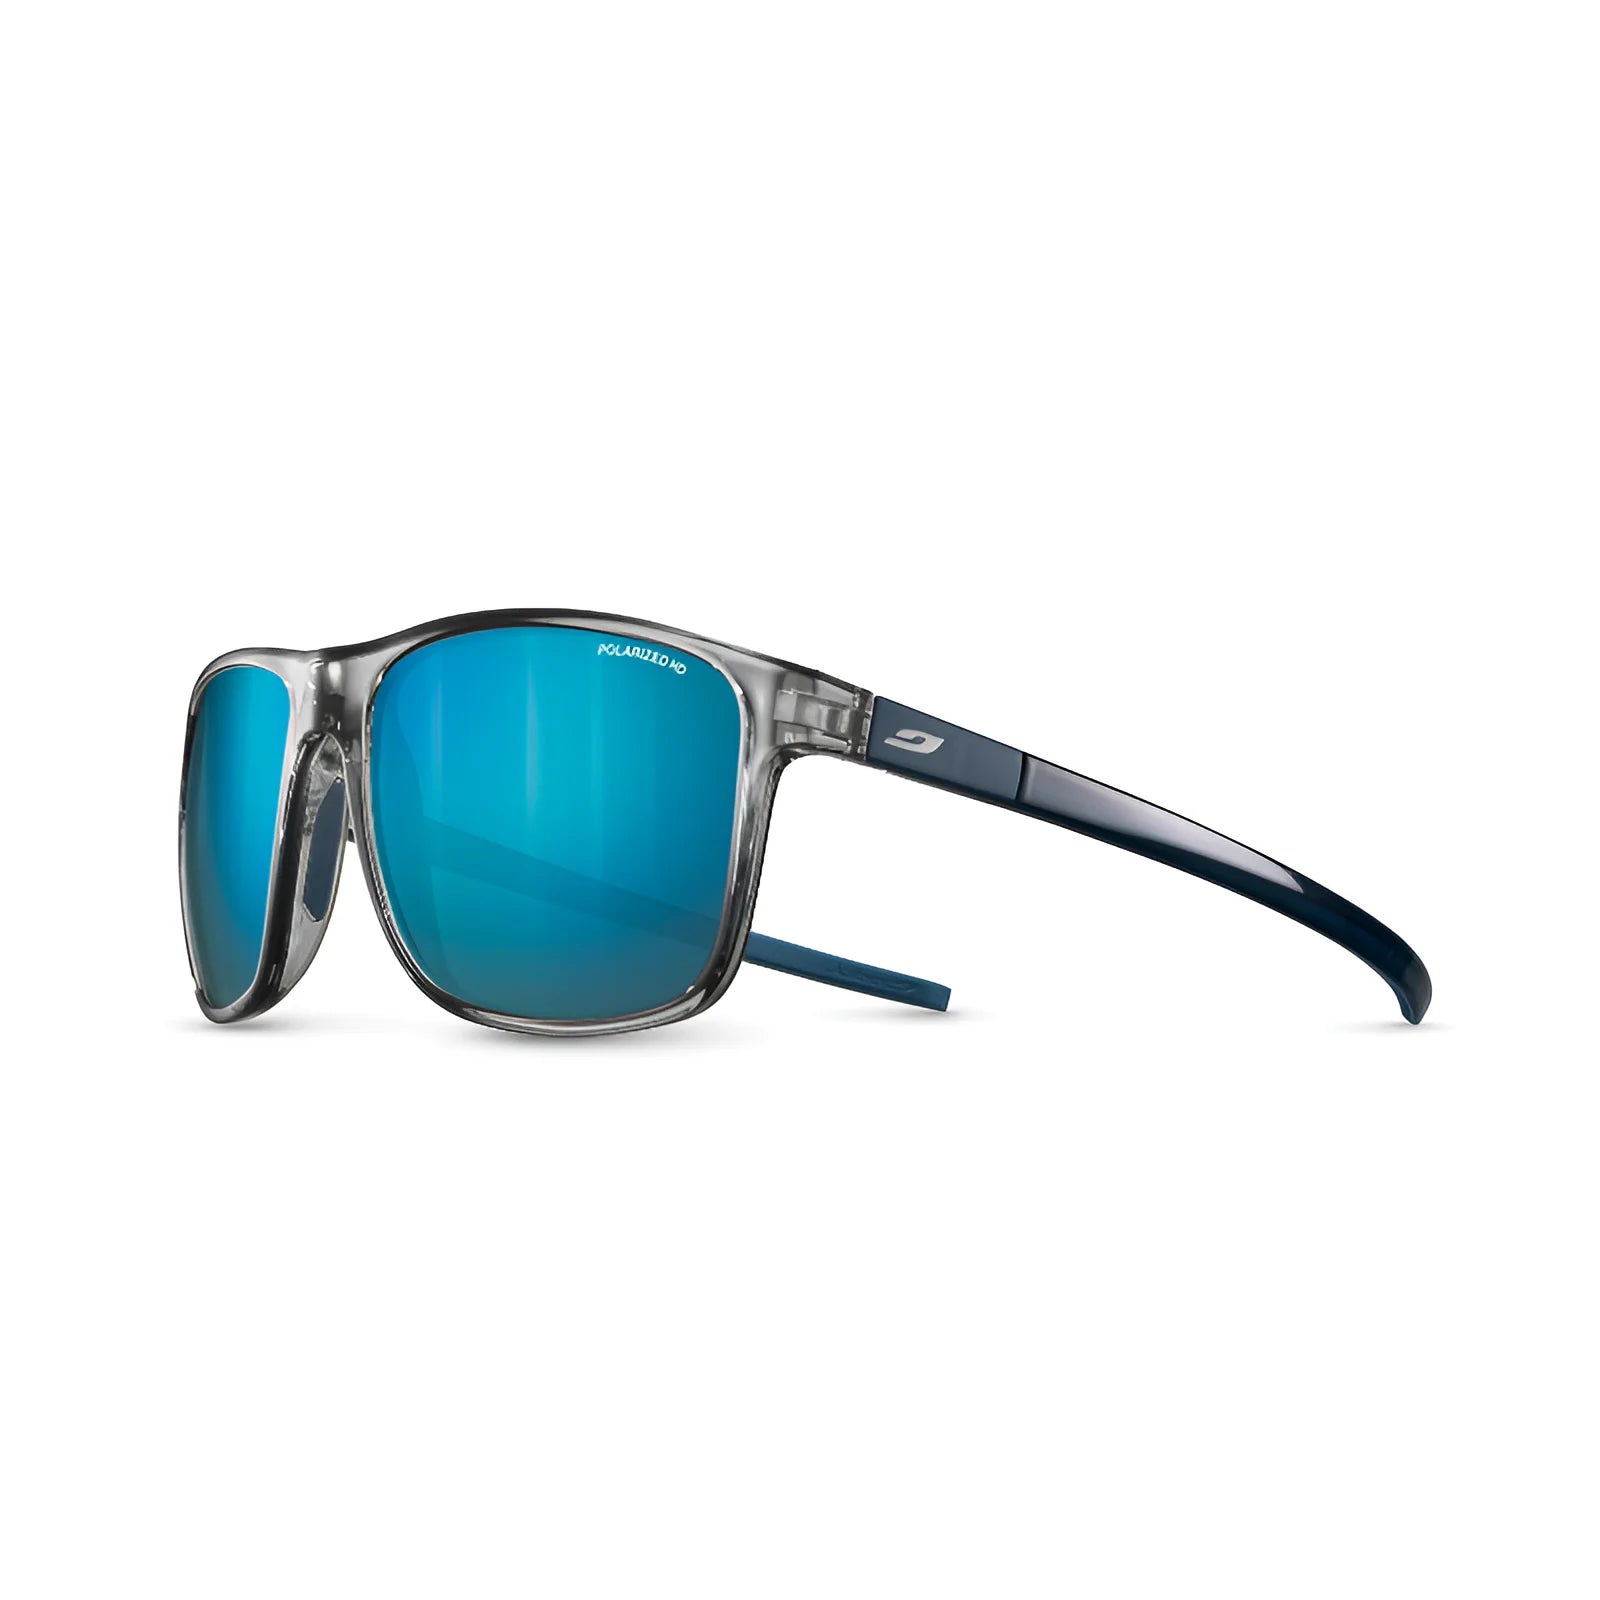 Julbo The Streets Sunglasses Translucent Gray / Blue / Spectron 3 Polarized HD (VLT 7%)